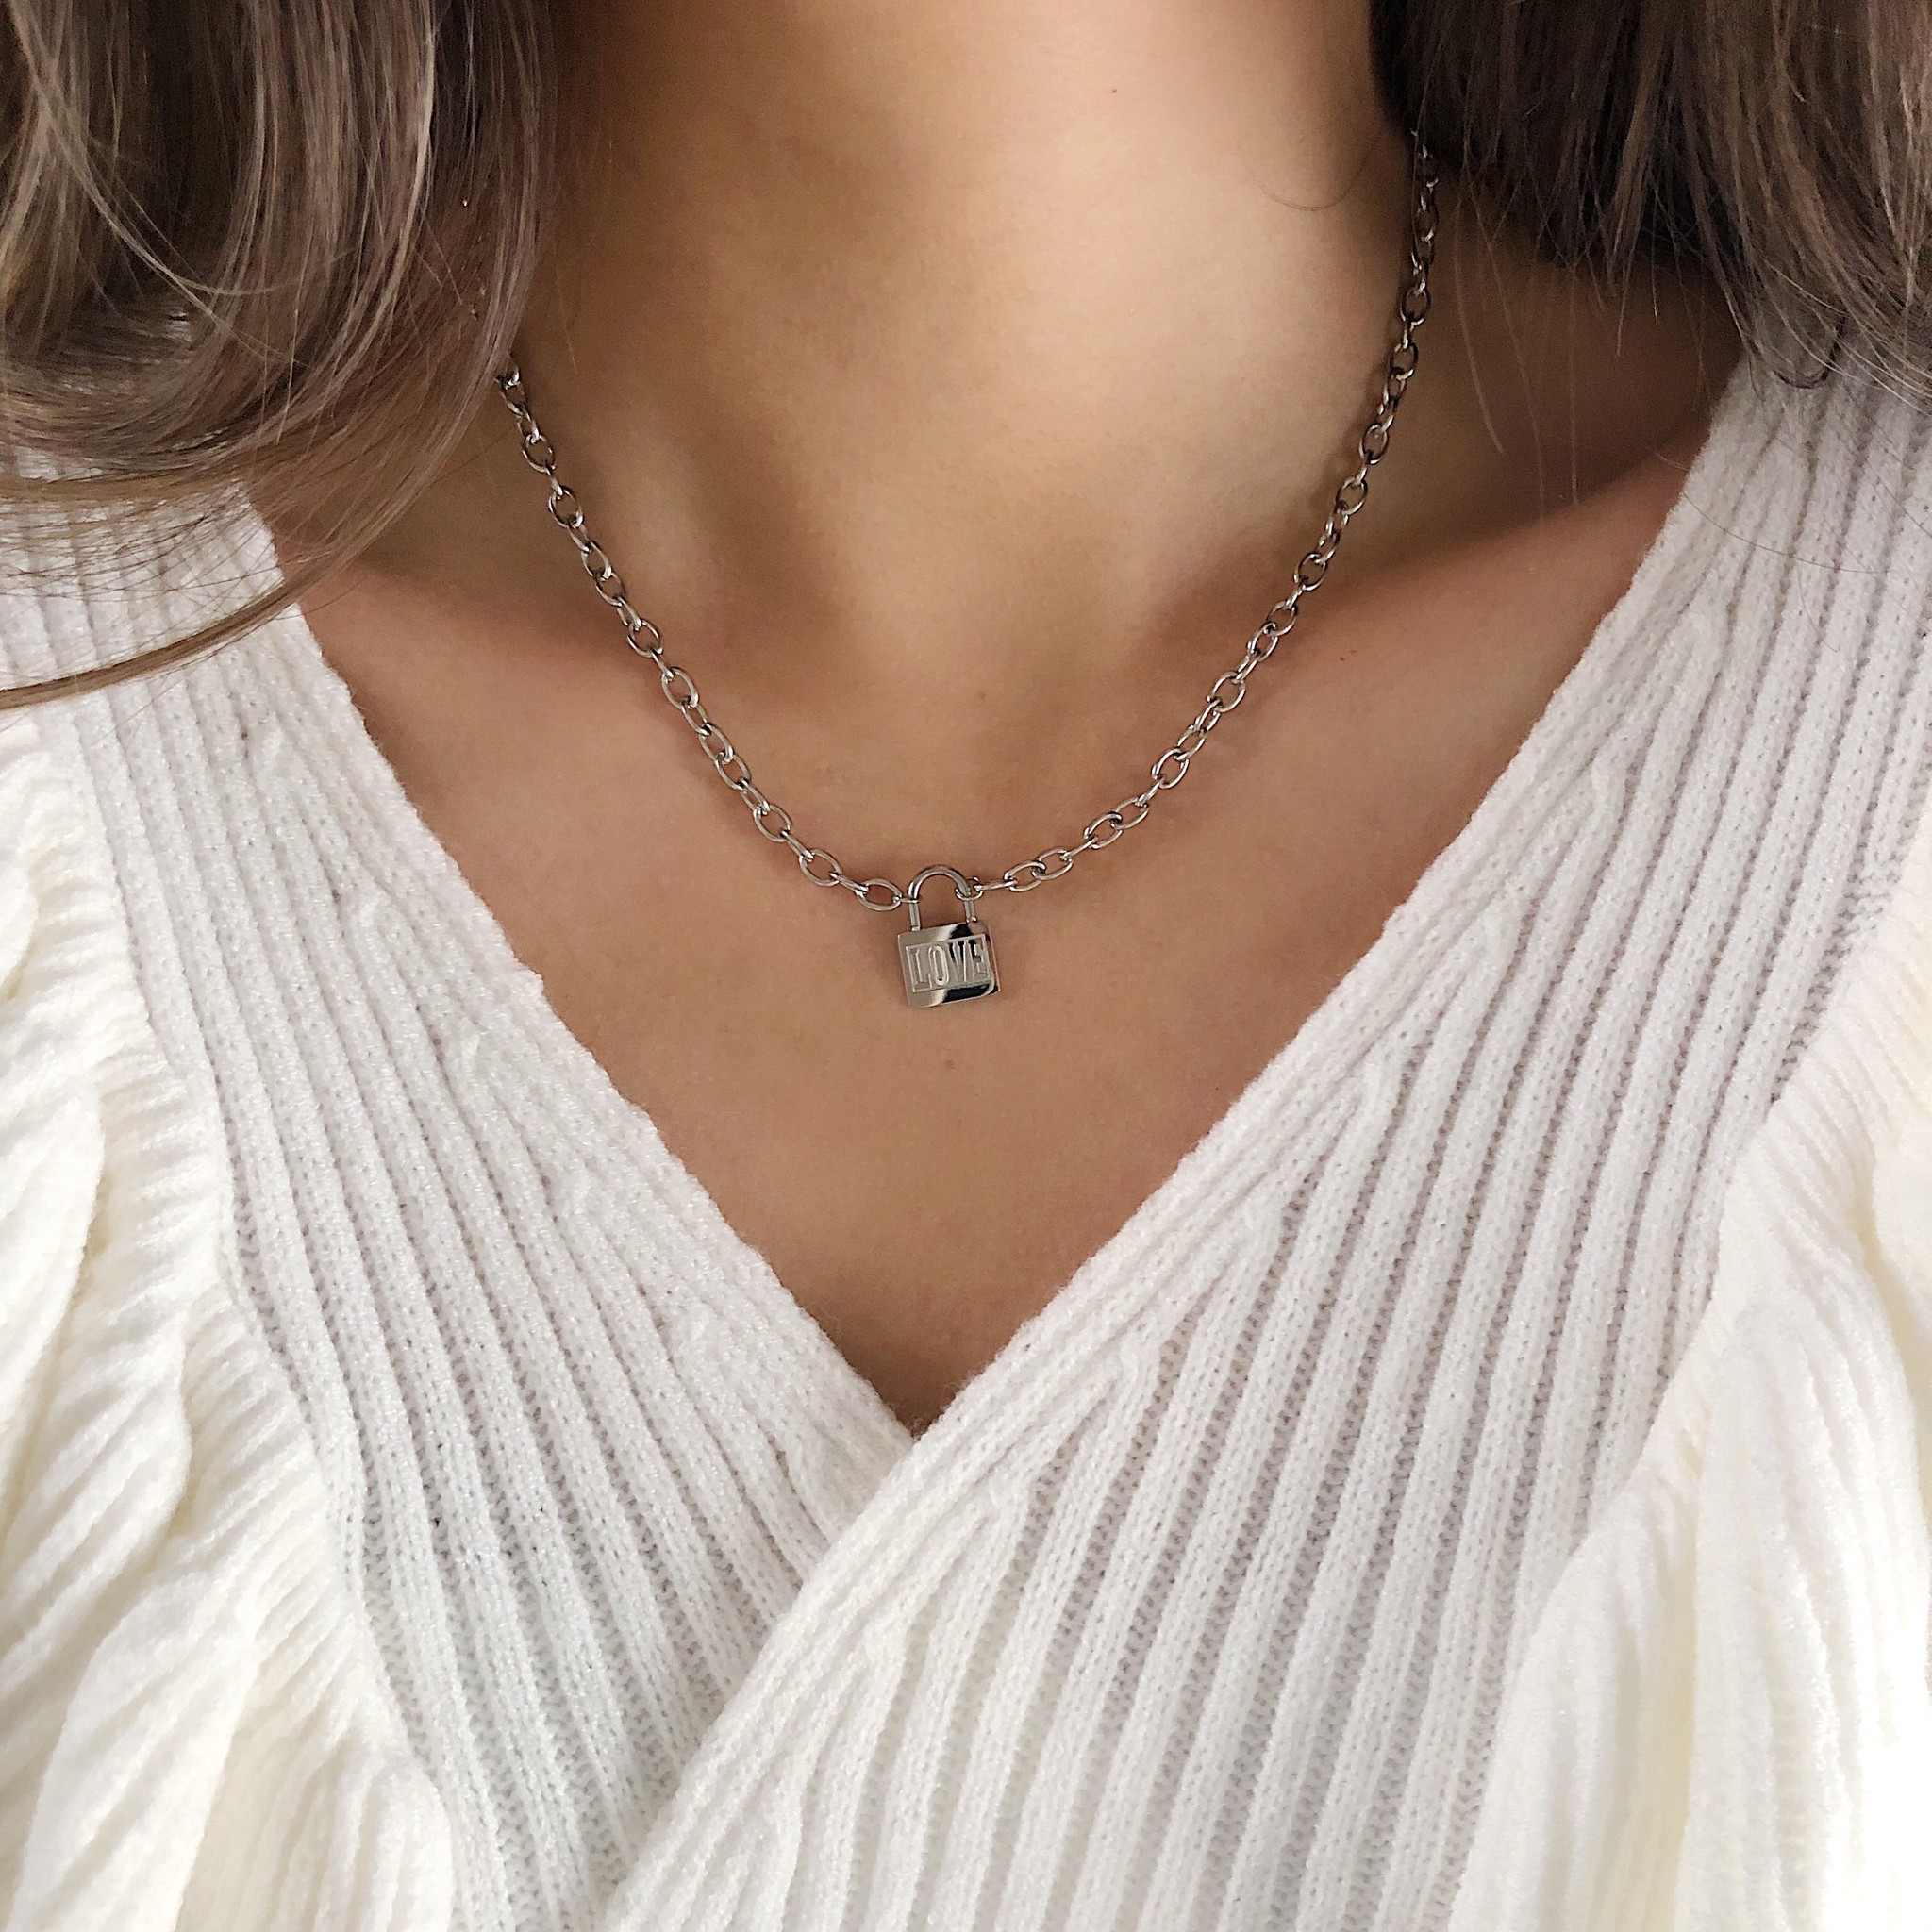 Silver Love Lock Necklace - Hello My Love